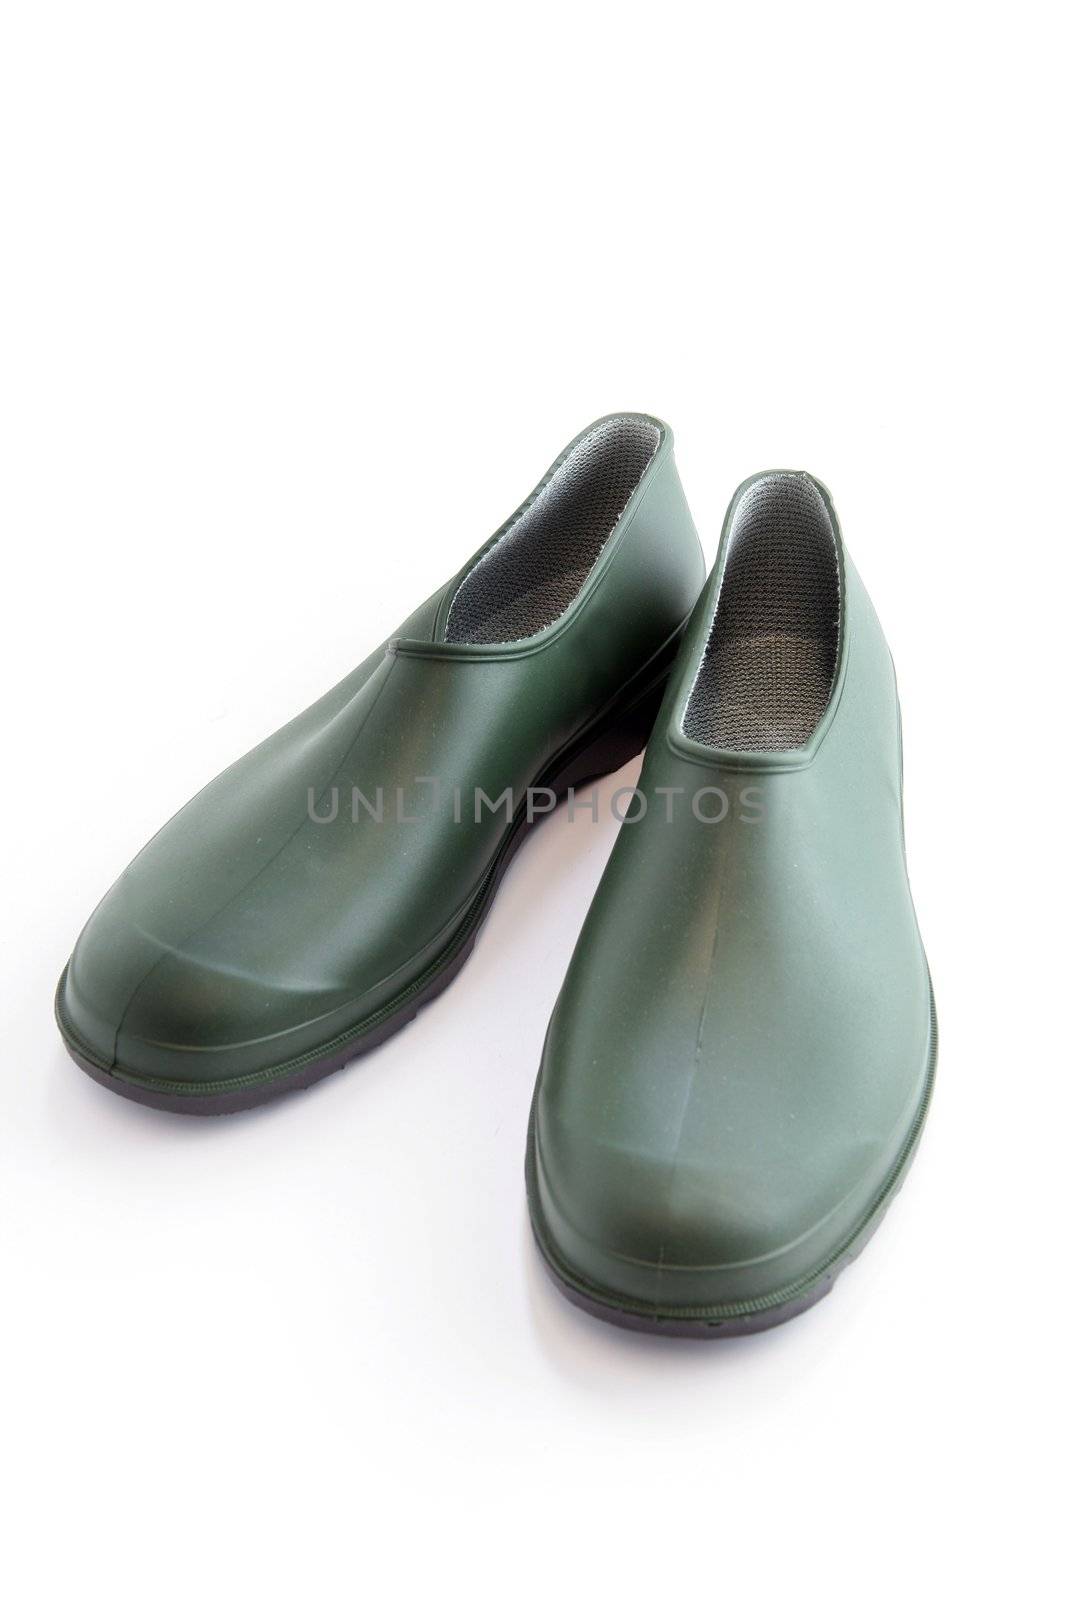 Shoe version of wellingtons by phovoir